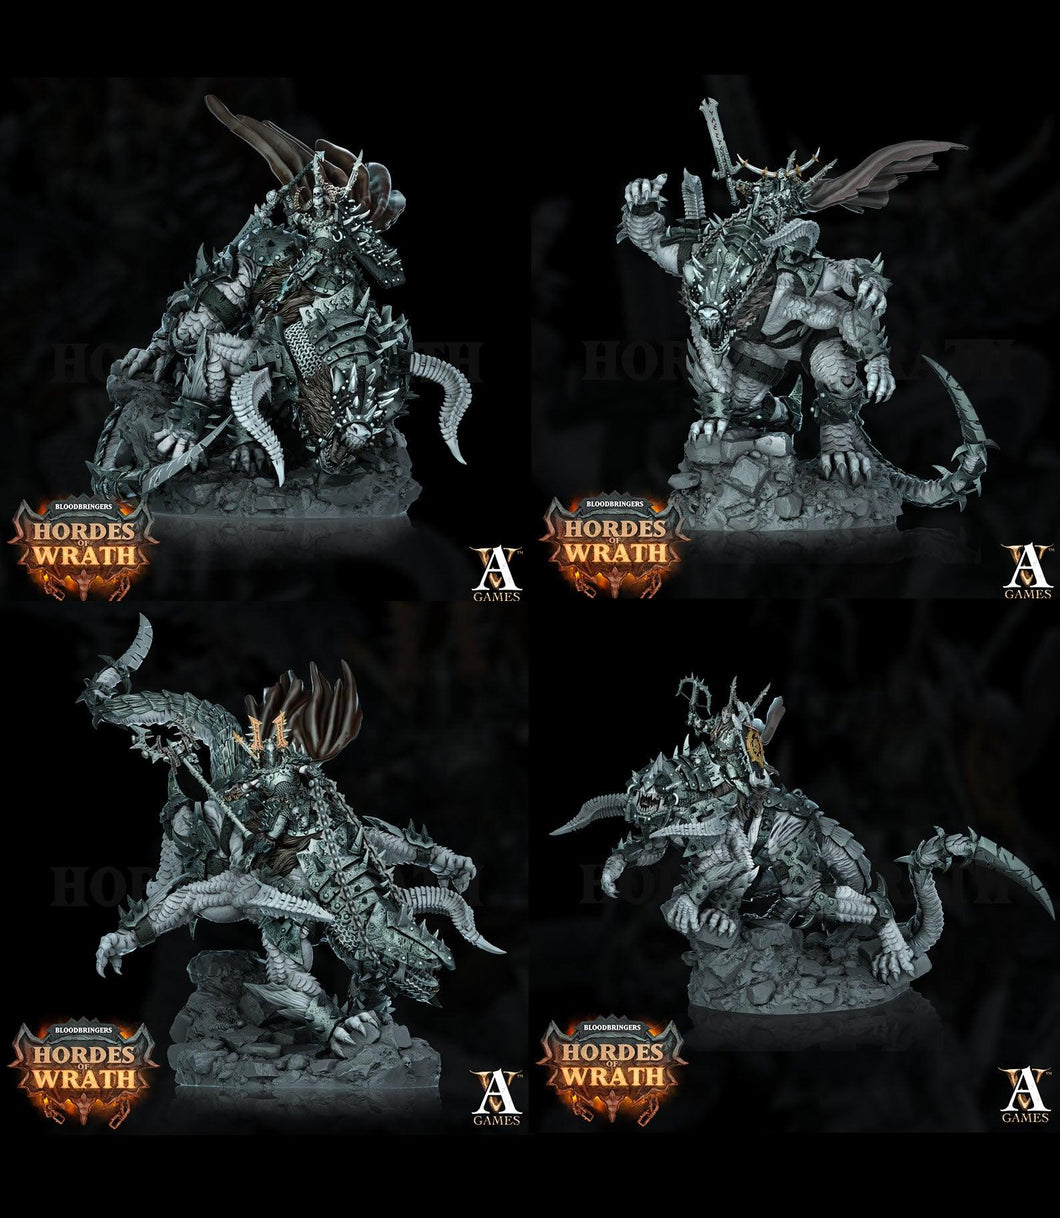 3D Printed Archvillain Games Bloodbringers - Hordes of Wrath Grumlak Riders 28 32mm D&D - Charming Terrain